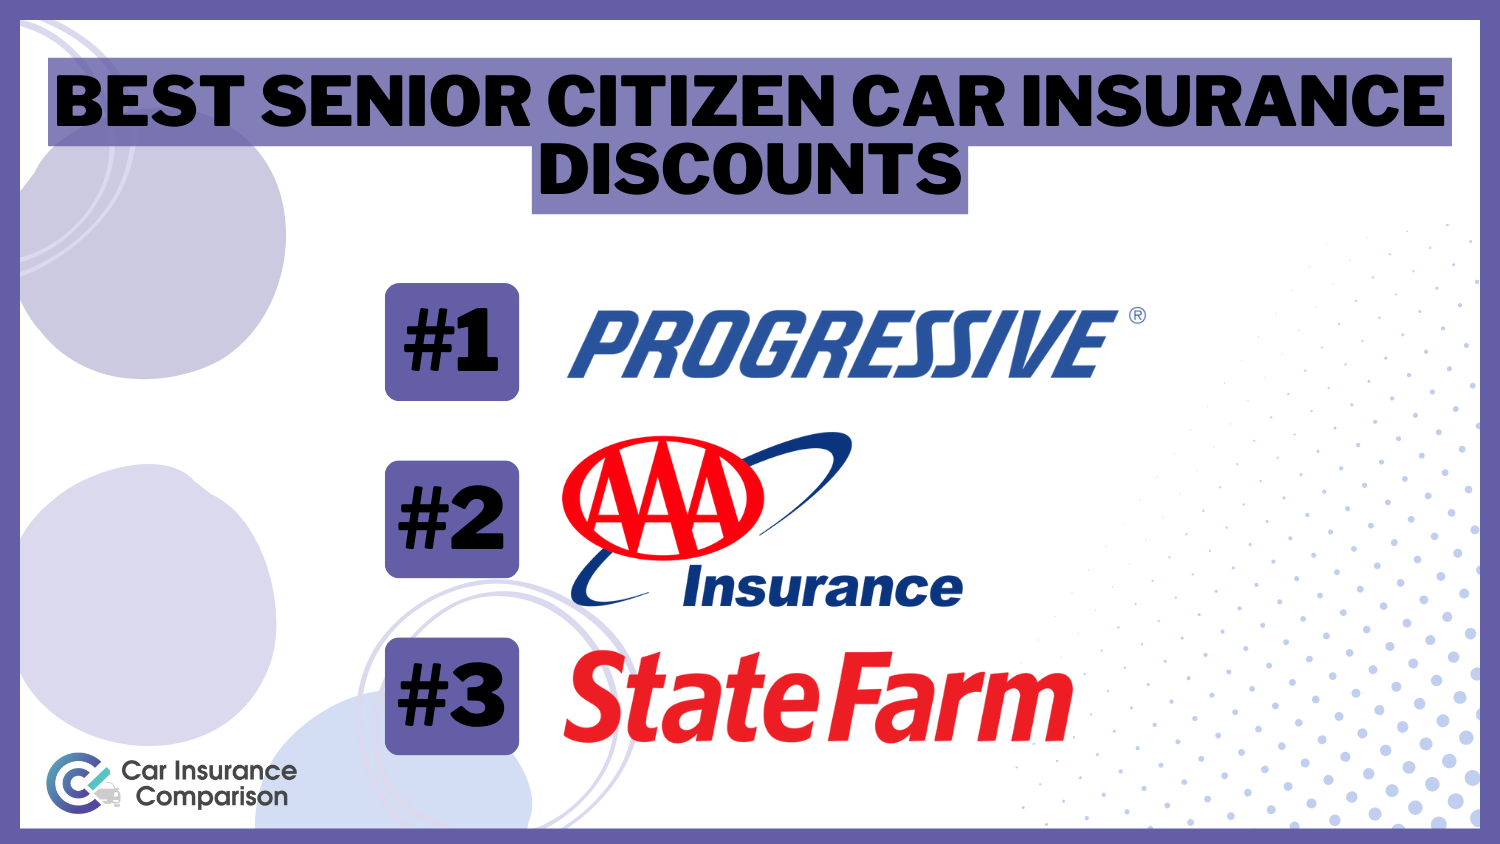 Best Senior Citizen Car Insurance Discounts: Progressive, AAA, and State Farm